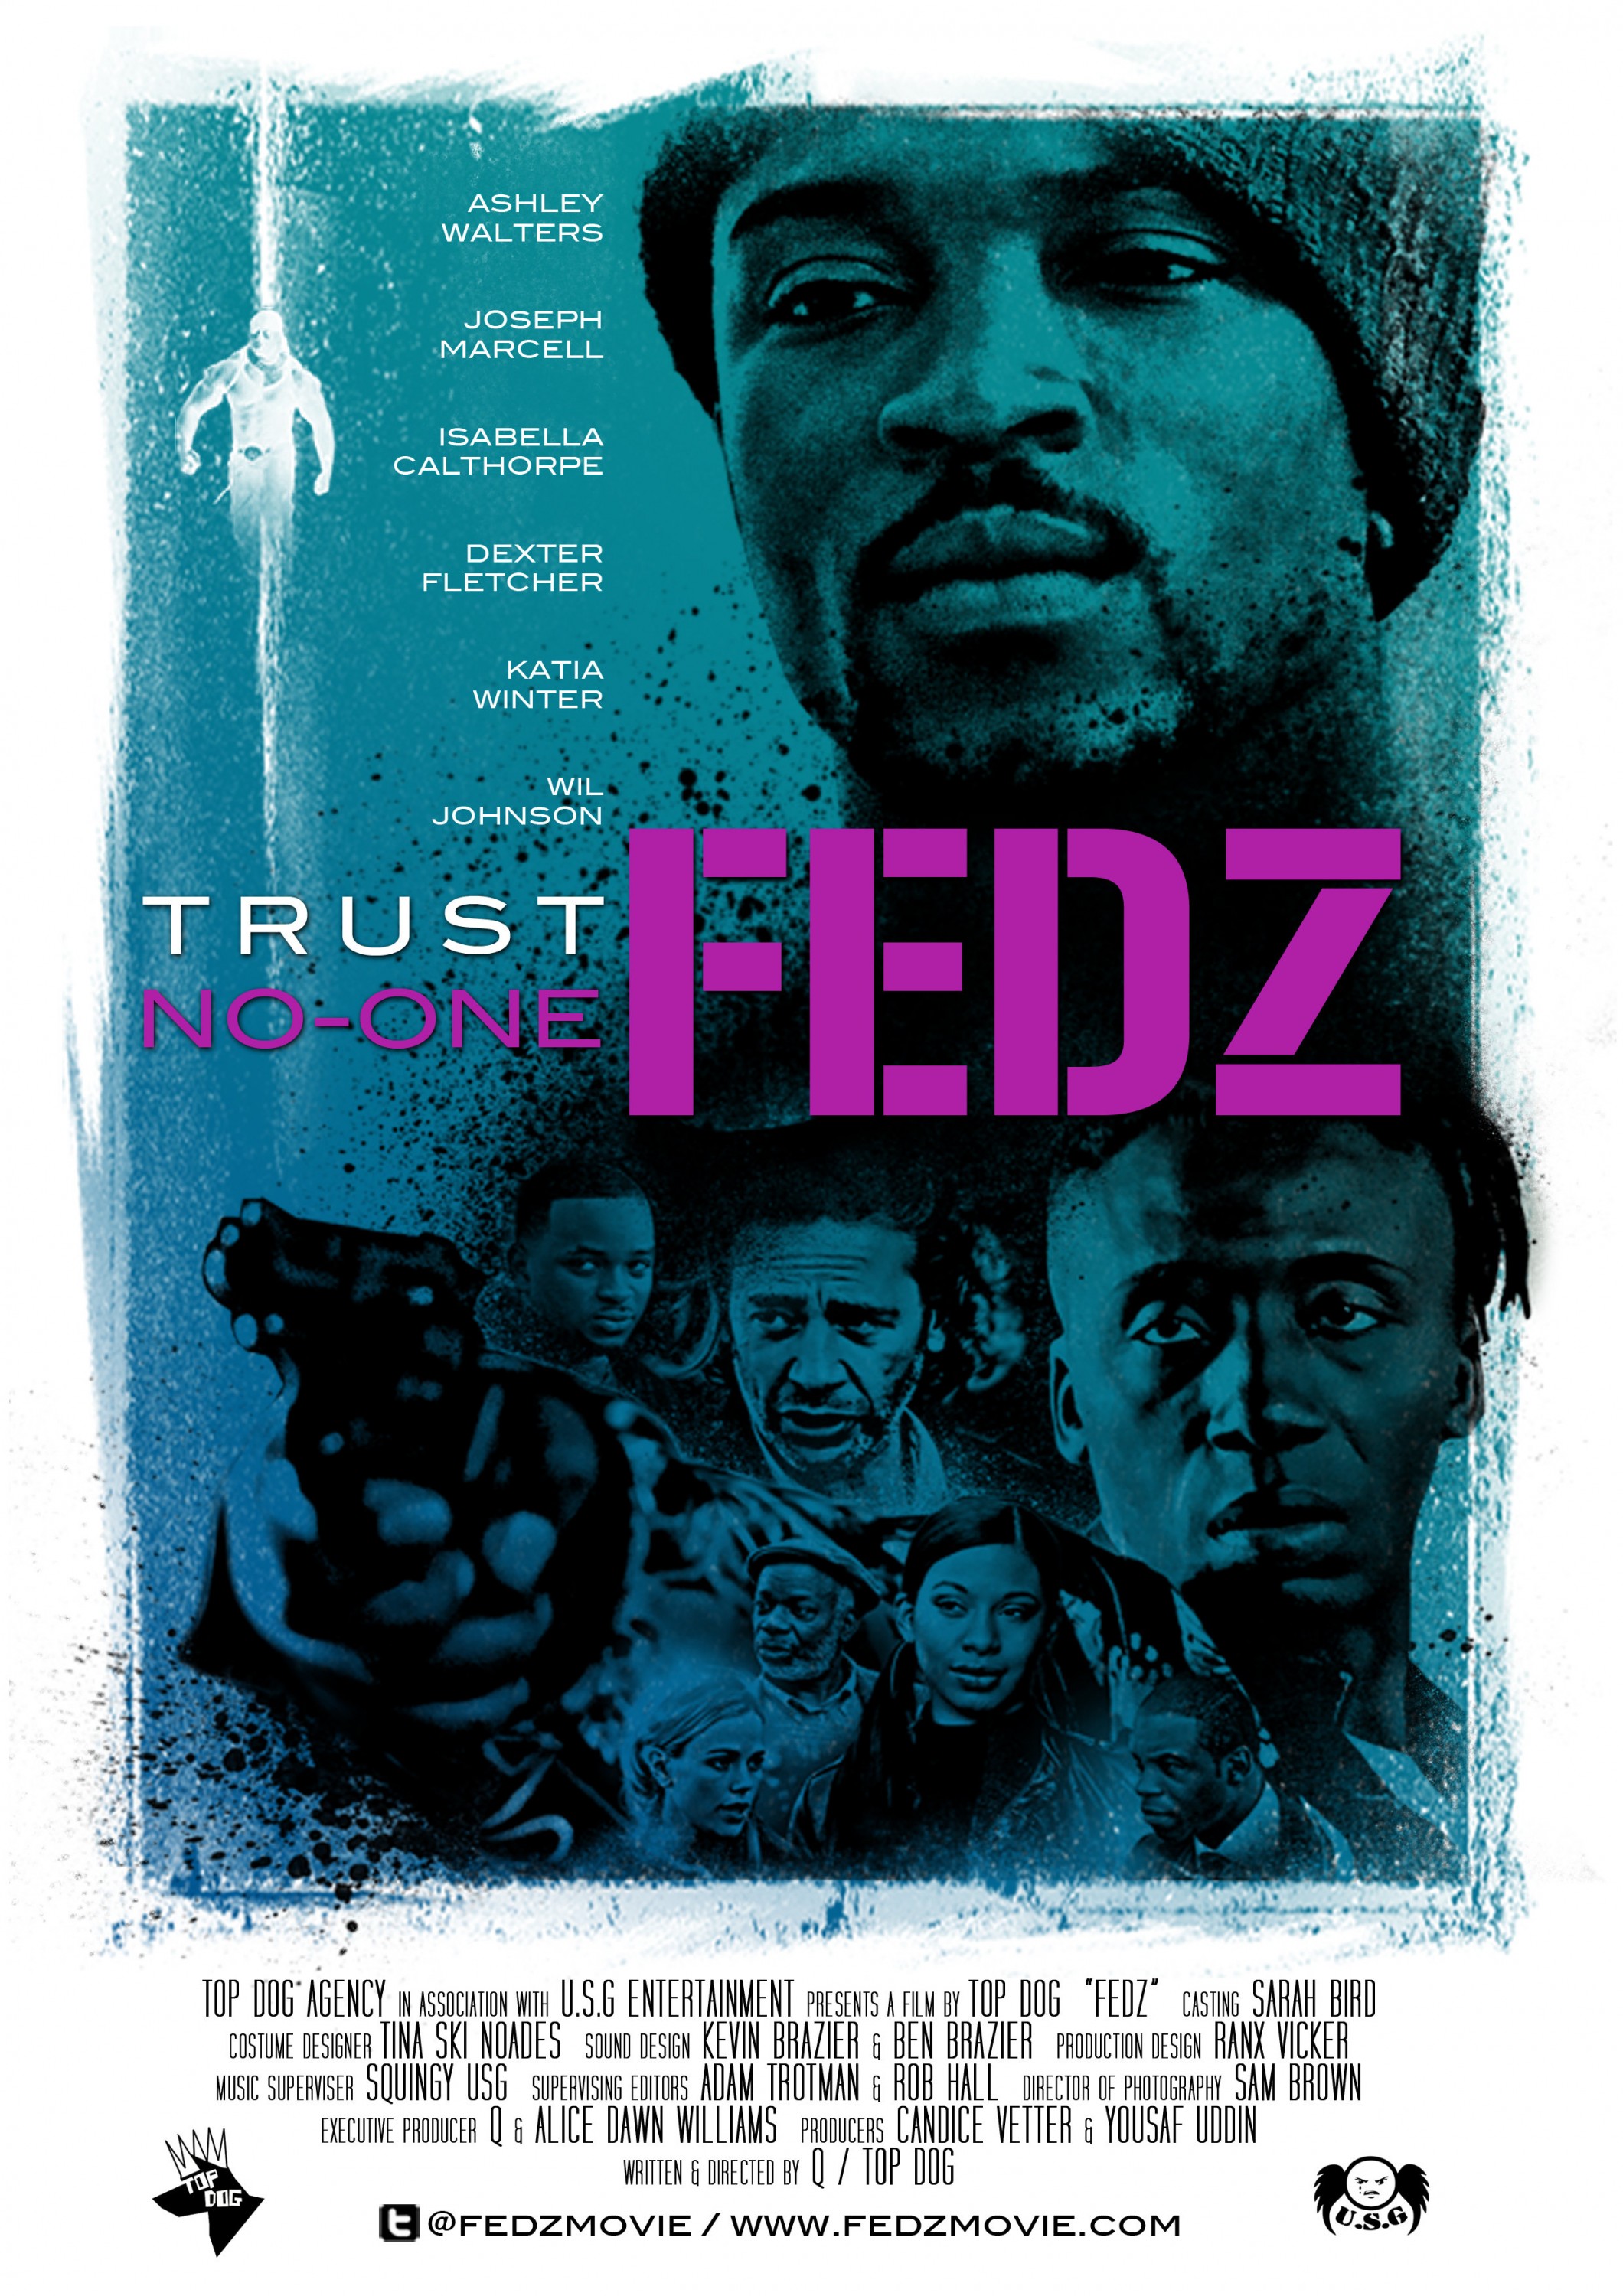 Mega Sized Movie Poster Image for Fedz 